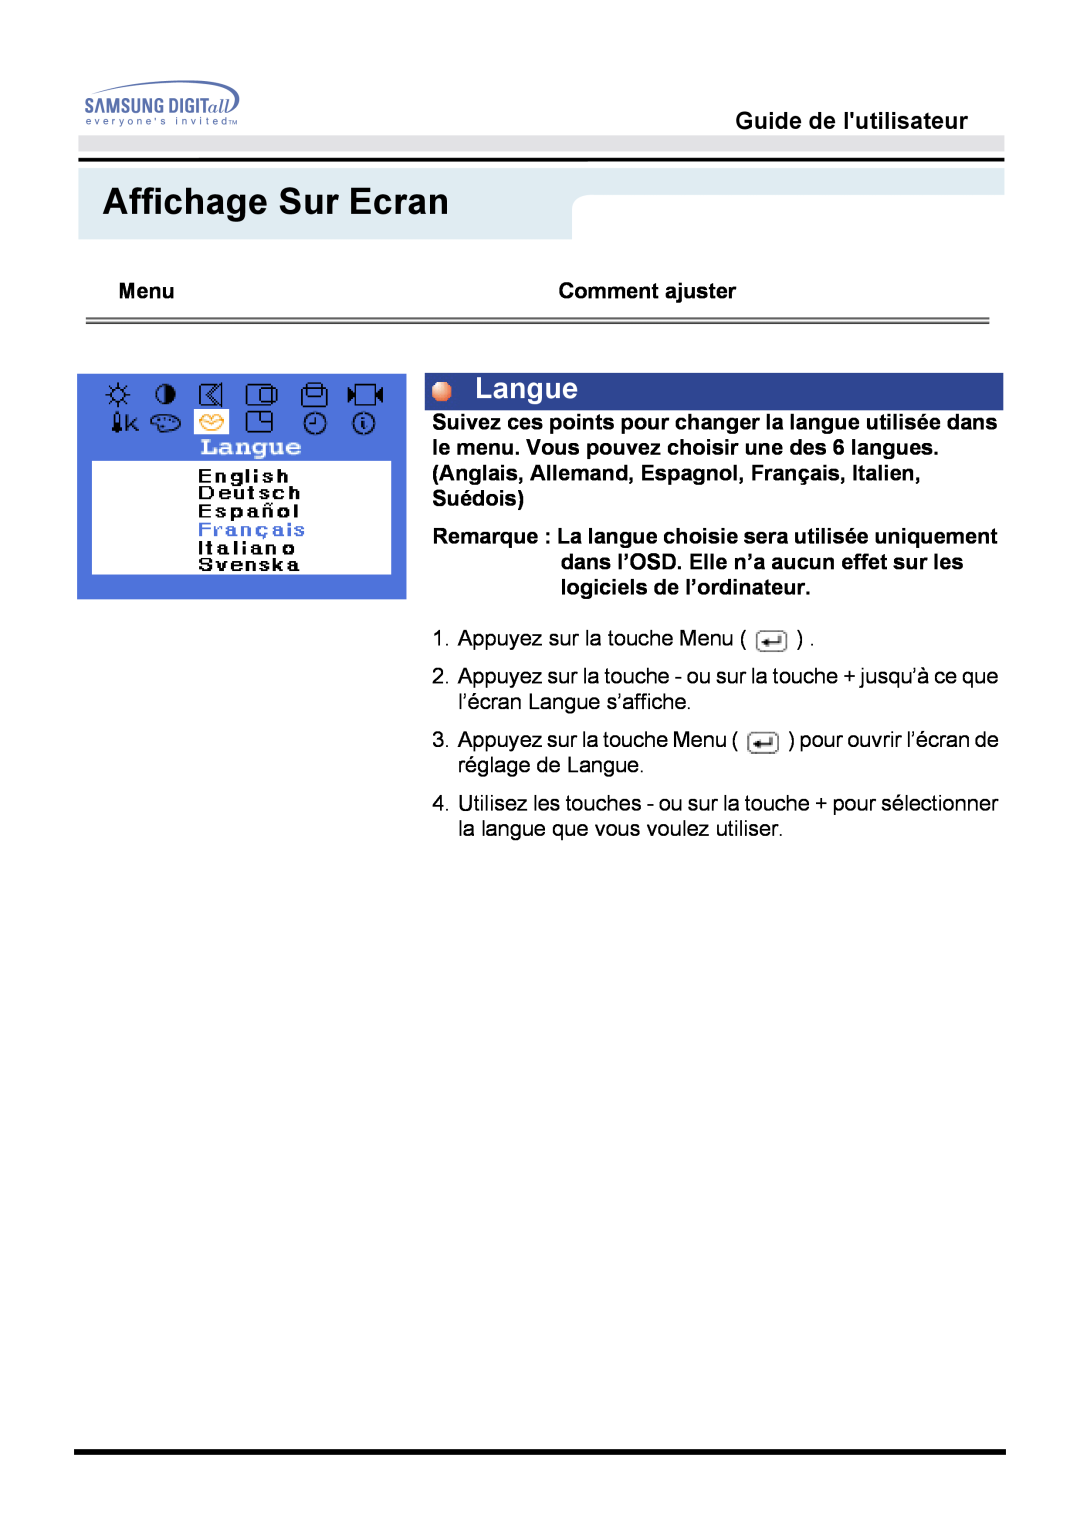 Samsung GH15MSAN/EDC, GH15MSSS/EDC, GH15MSSB/EDC, GG15MSSB/EDC manual Langue, Affichage Sur Ecran, Guide de lutilisateur 